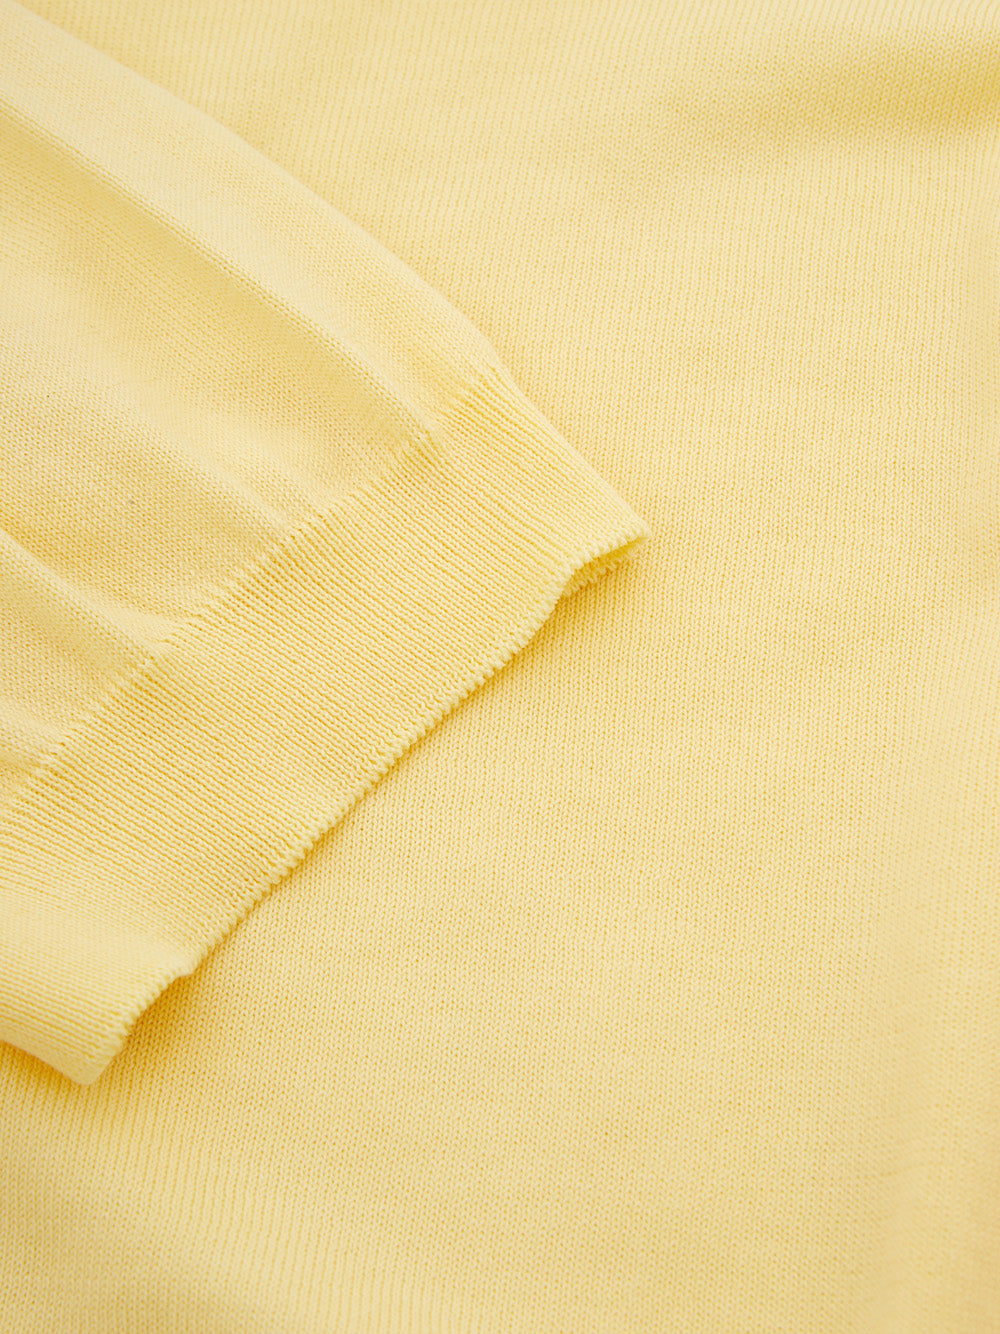 Gran Sasso Sunshine Yellow Cotton Men's T-Shirt